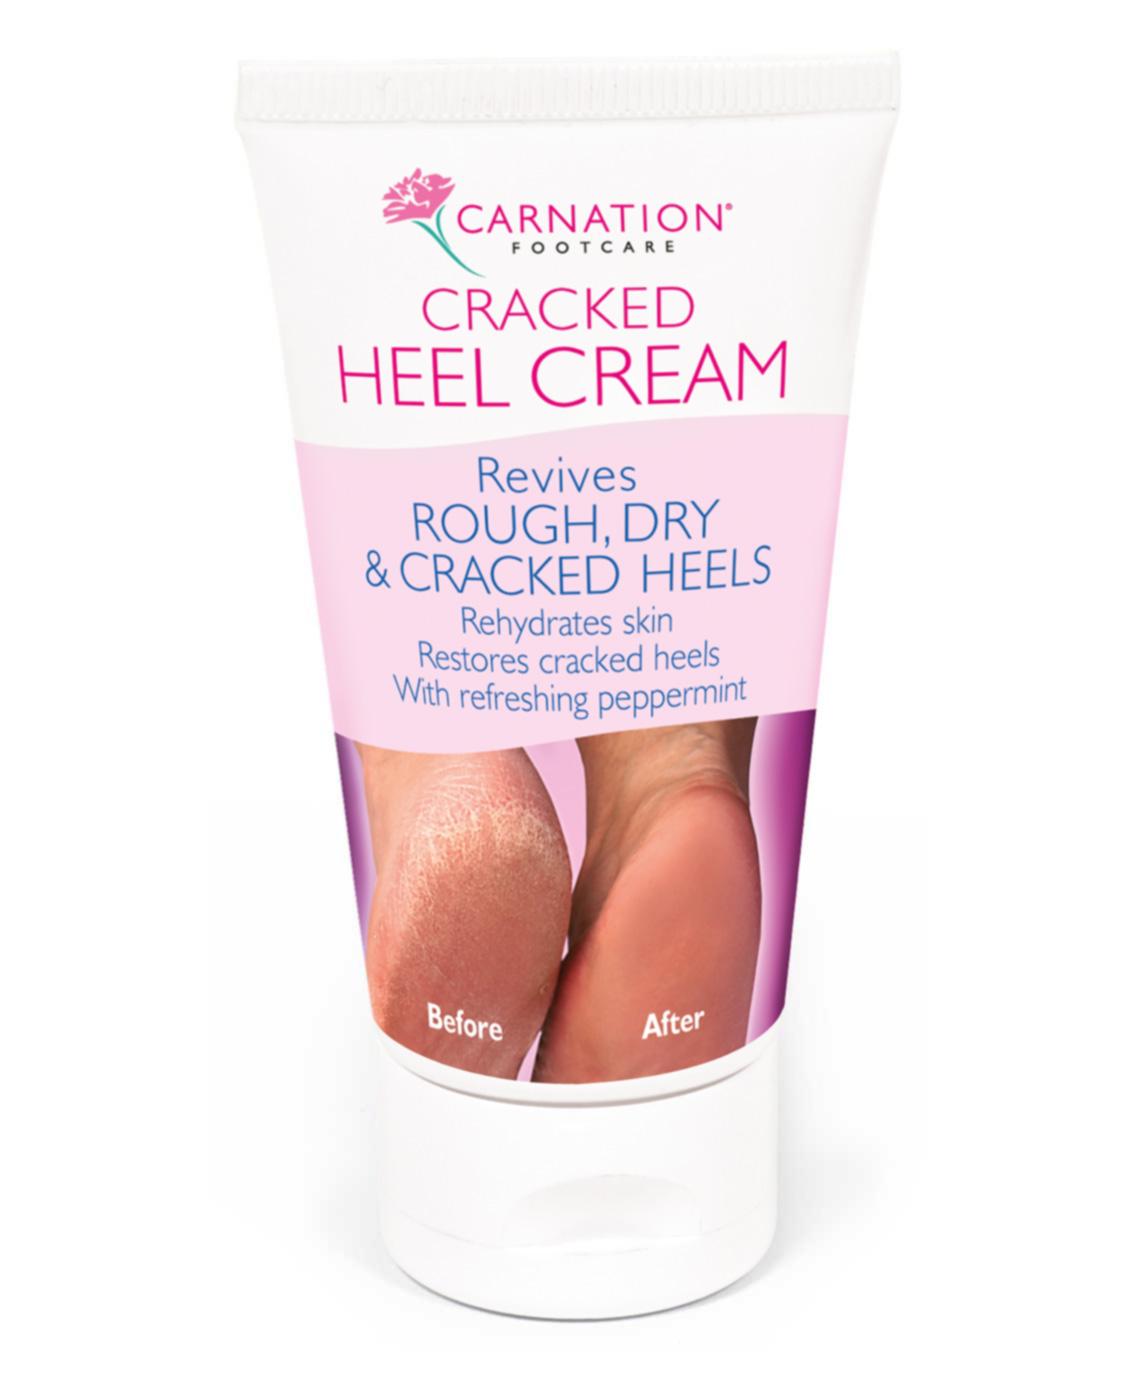 Cracked Heel Cream